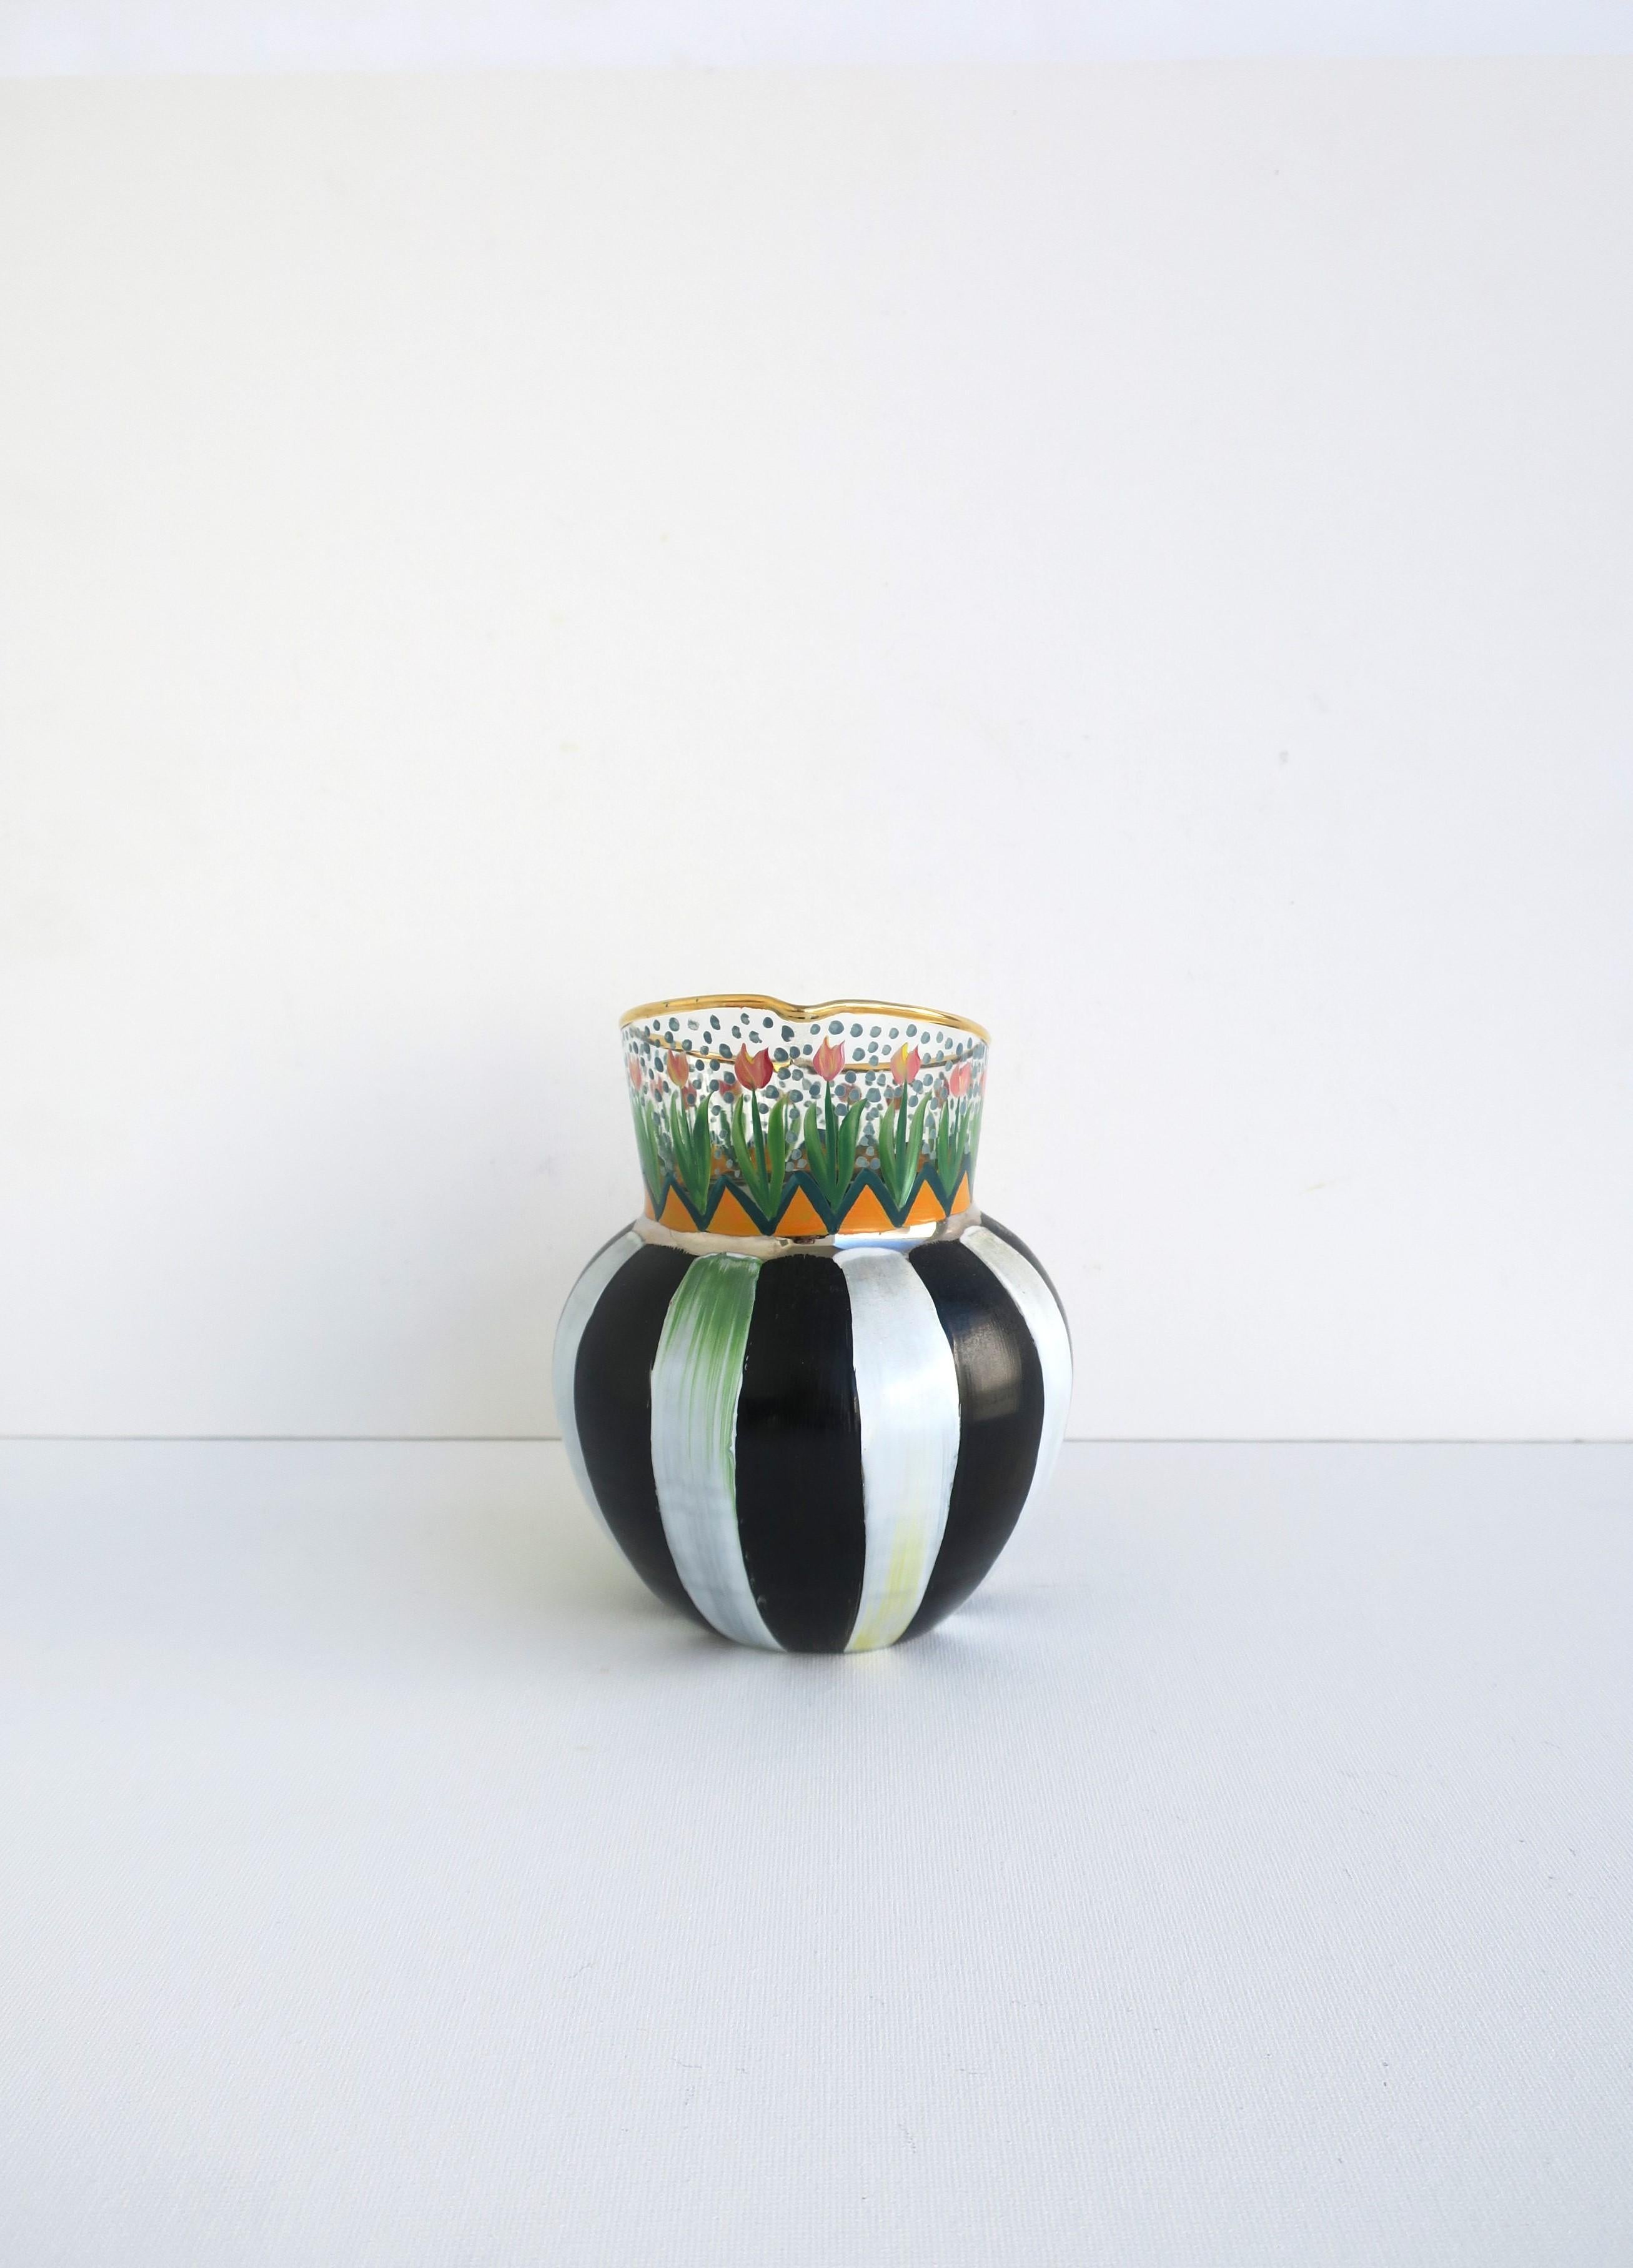 20th Century Mackenzie Childs Art Glass Pitcher or Vase with Garden Design, circa 1990s For Sale